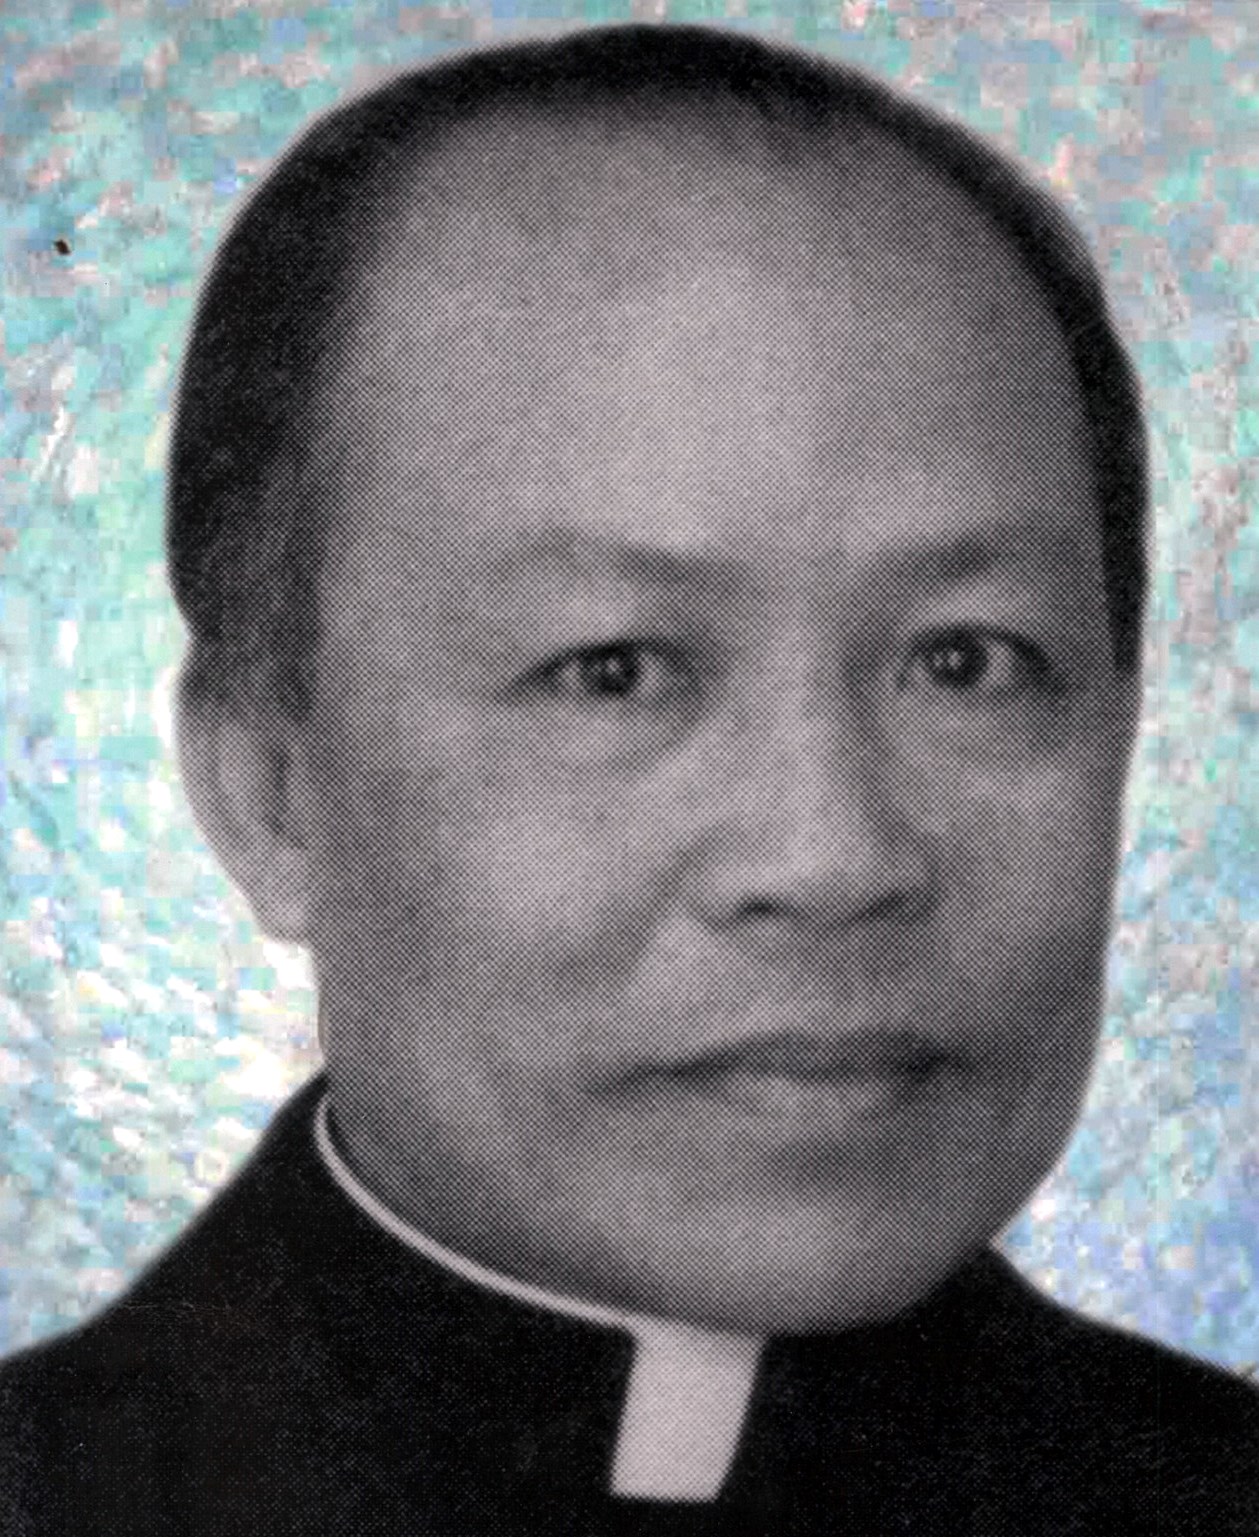 Obituary of Linh Mục Giuse Maria Đinh Tuấn Ngạn - 02/27/2023 - From the Family